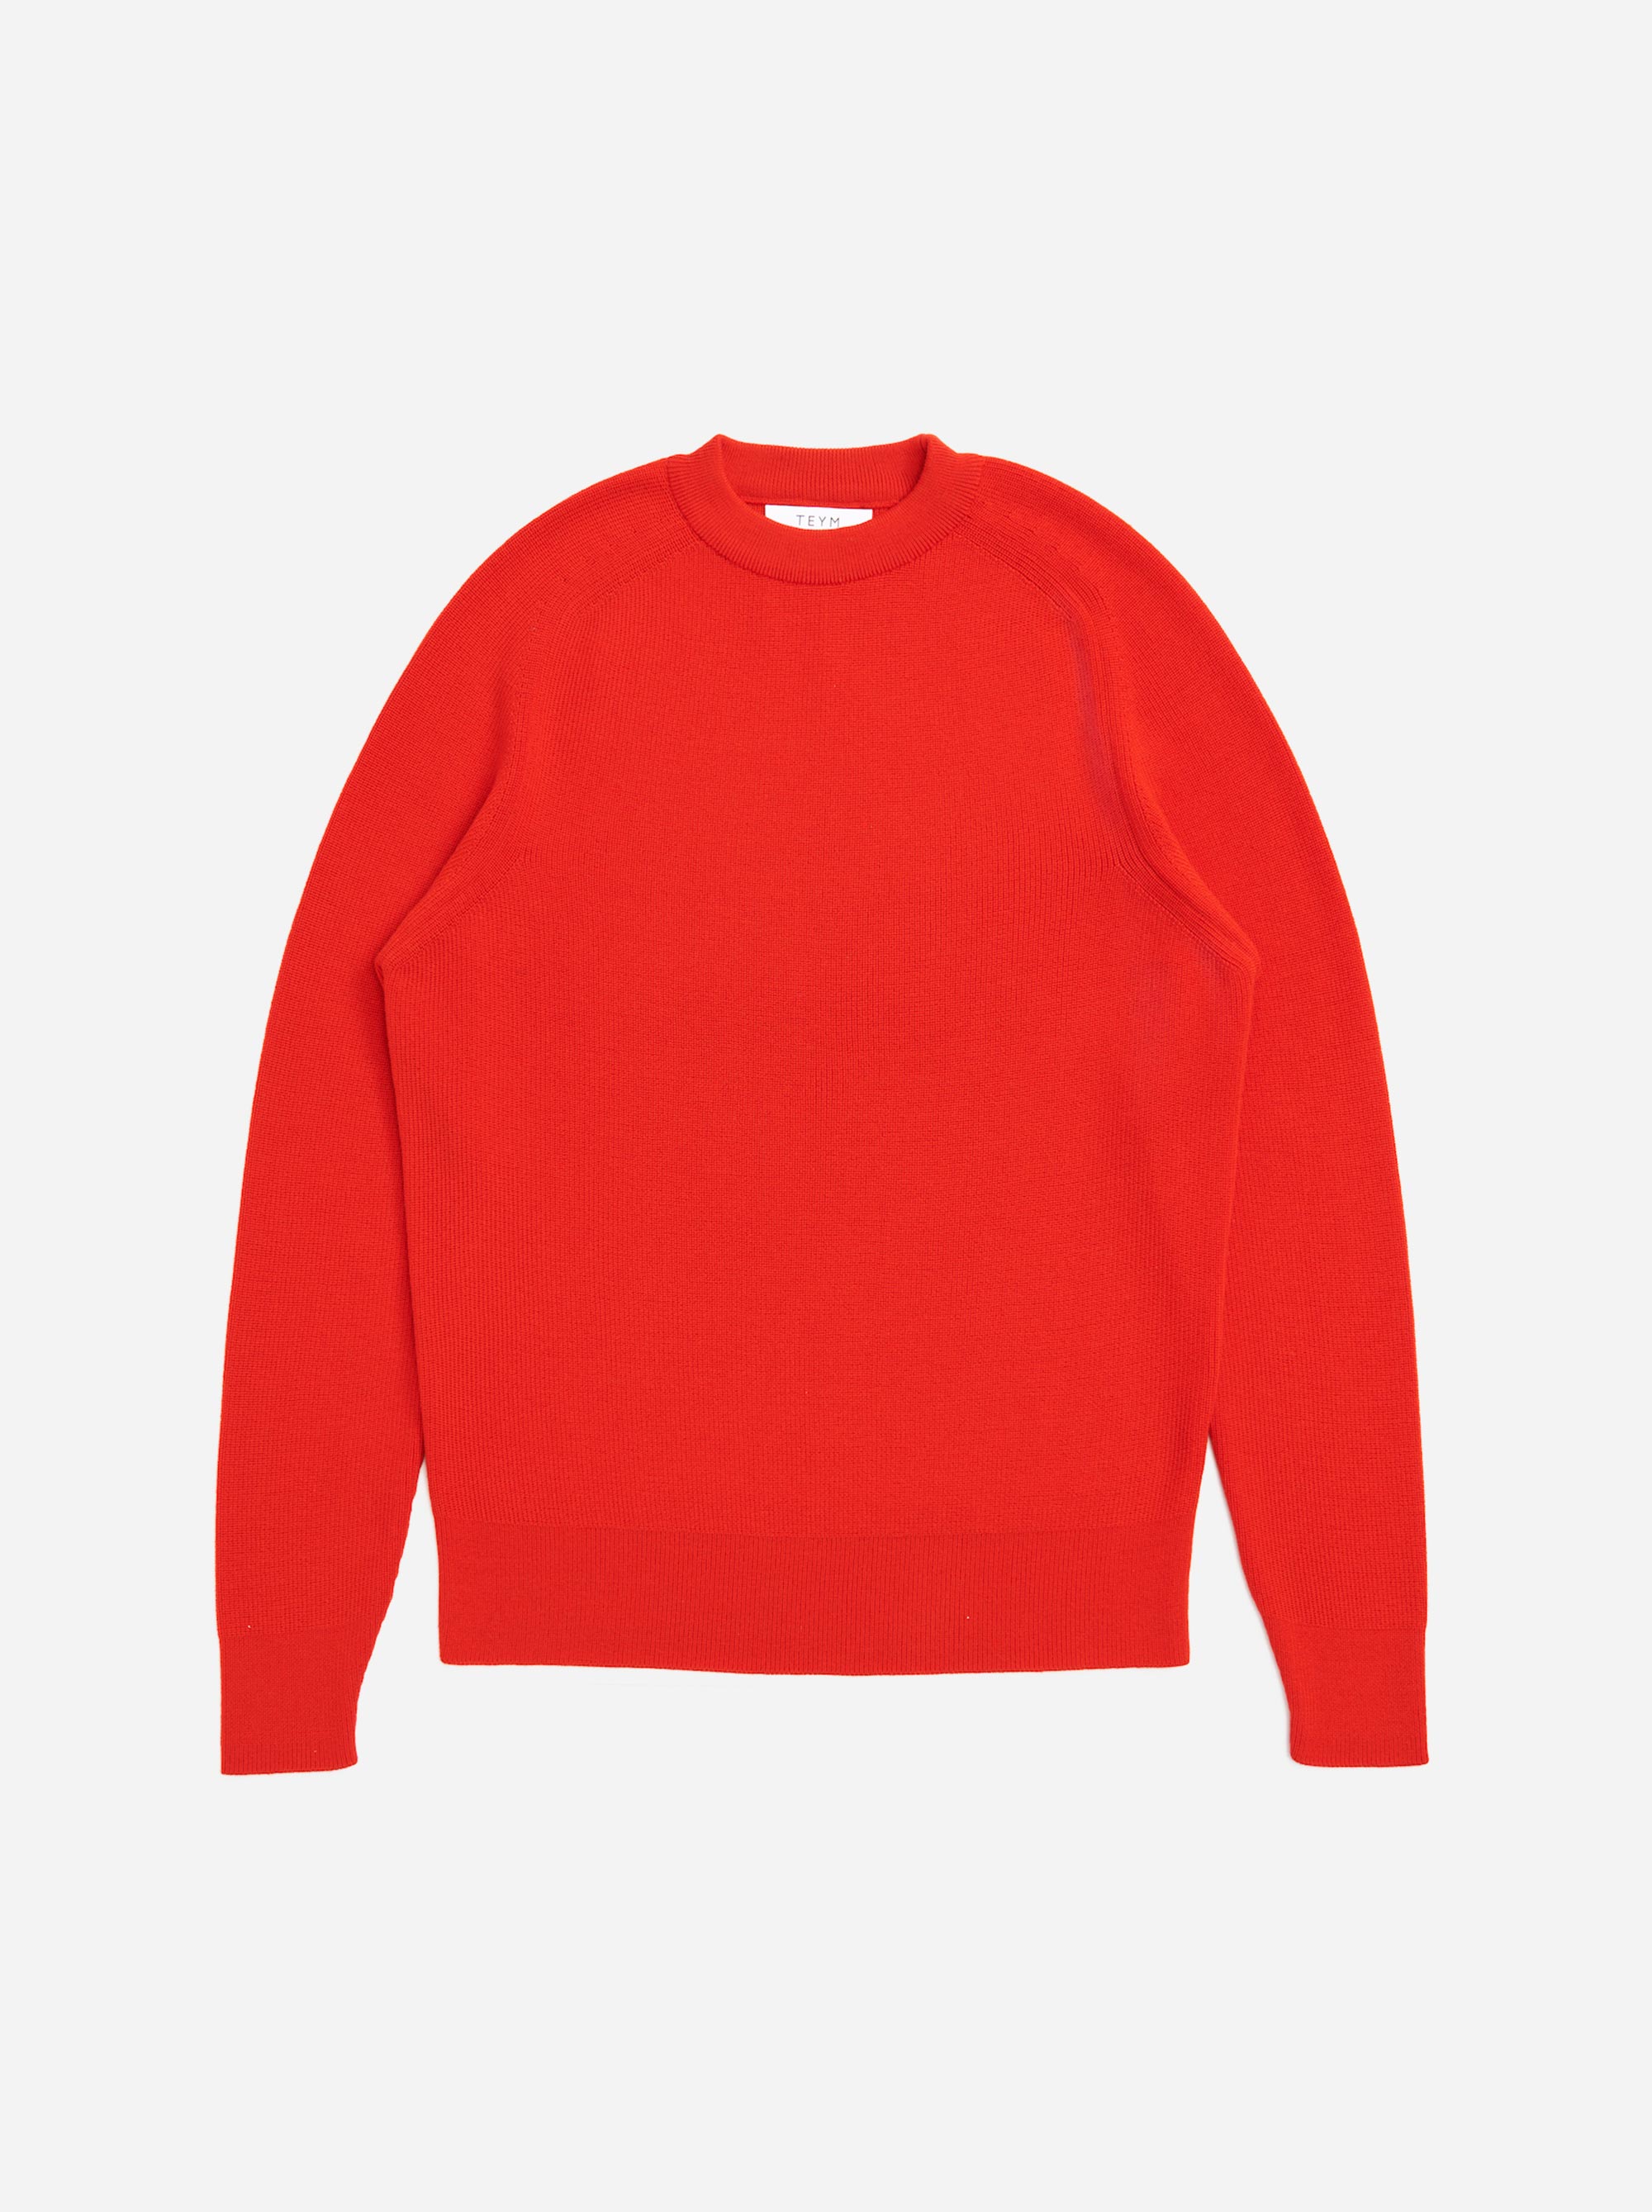 Teym - Crewneck - The Merino Sweater - Women - Red - 4